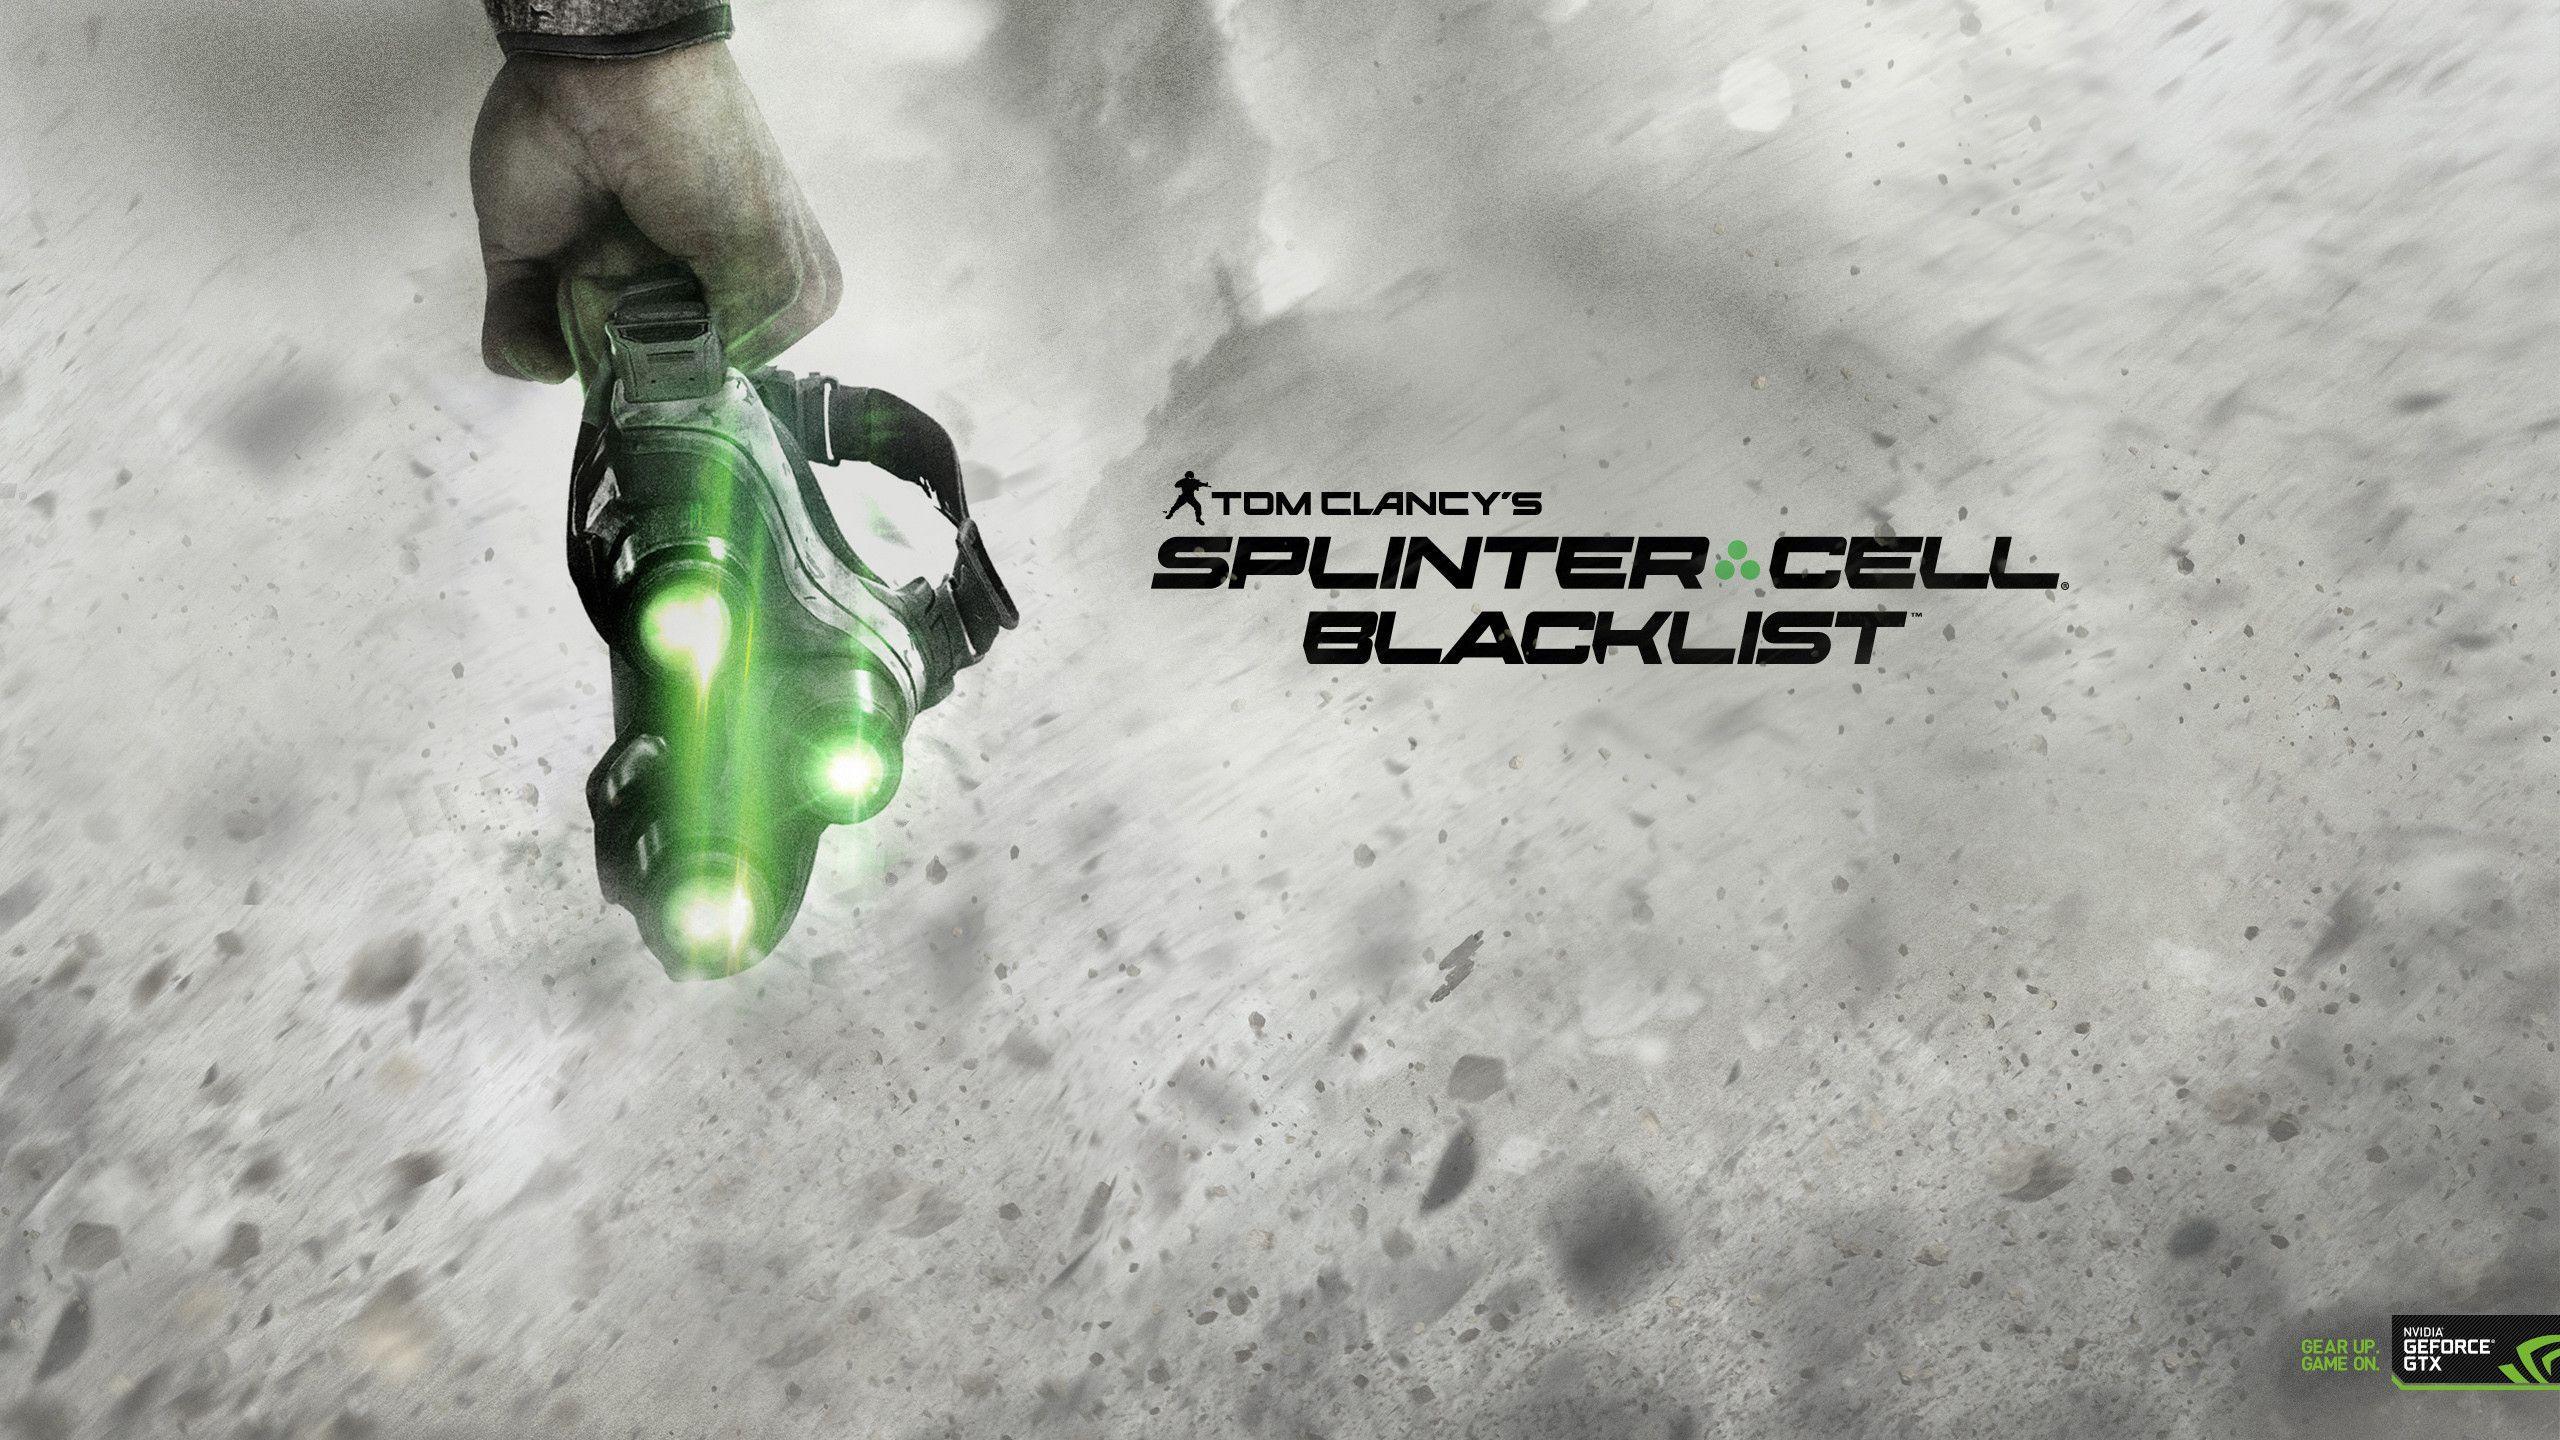 Get a GeForce.com exclusive Tom Clancy&;s Splinter Cell Blacklist